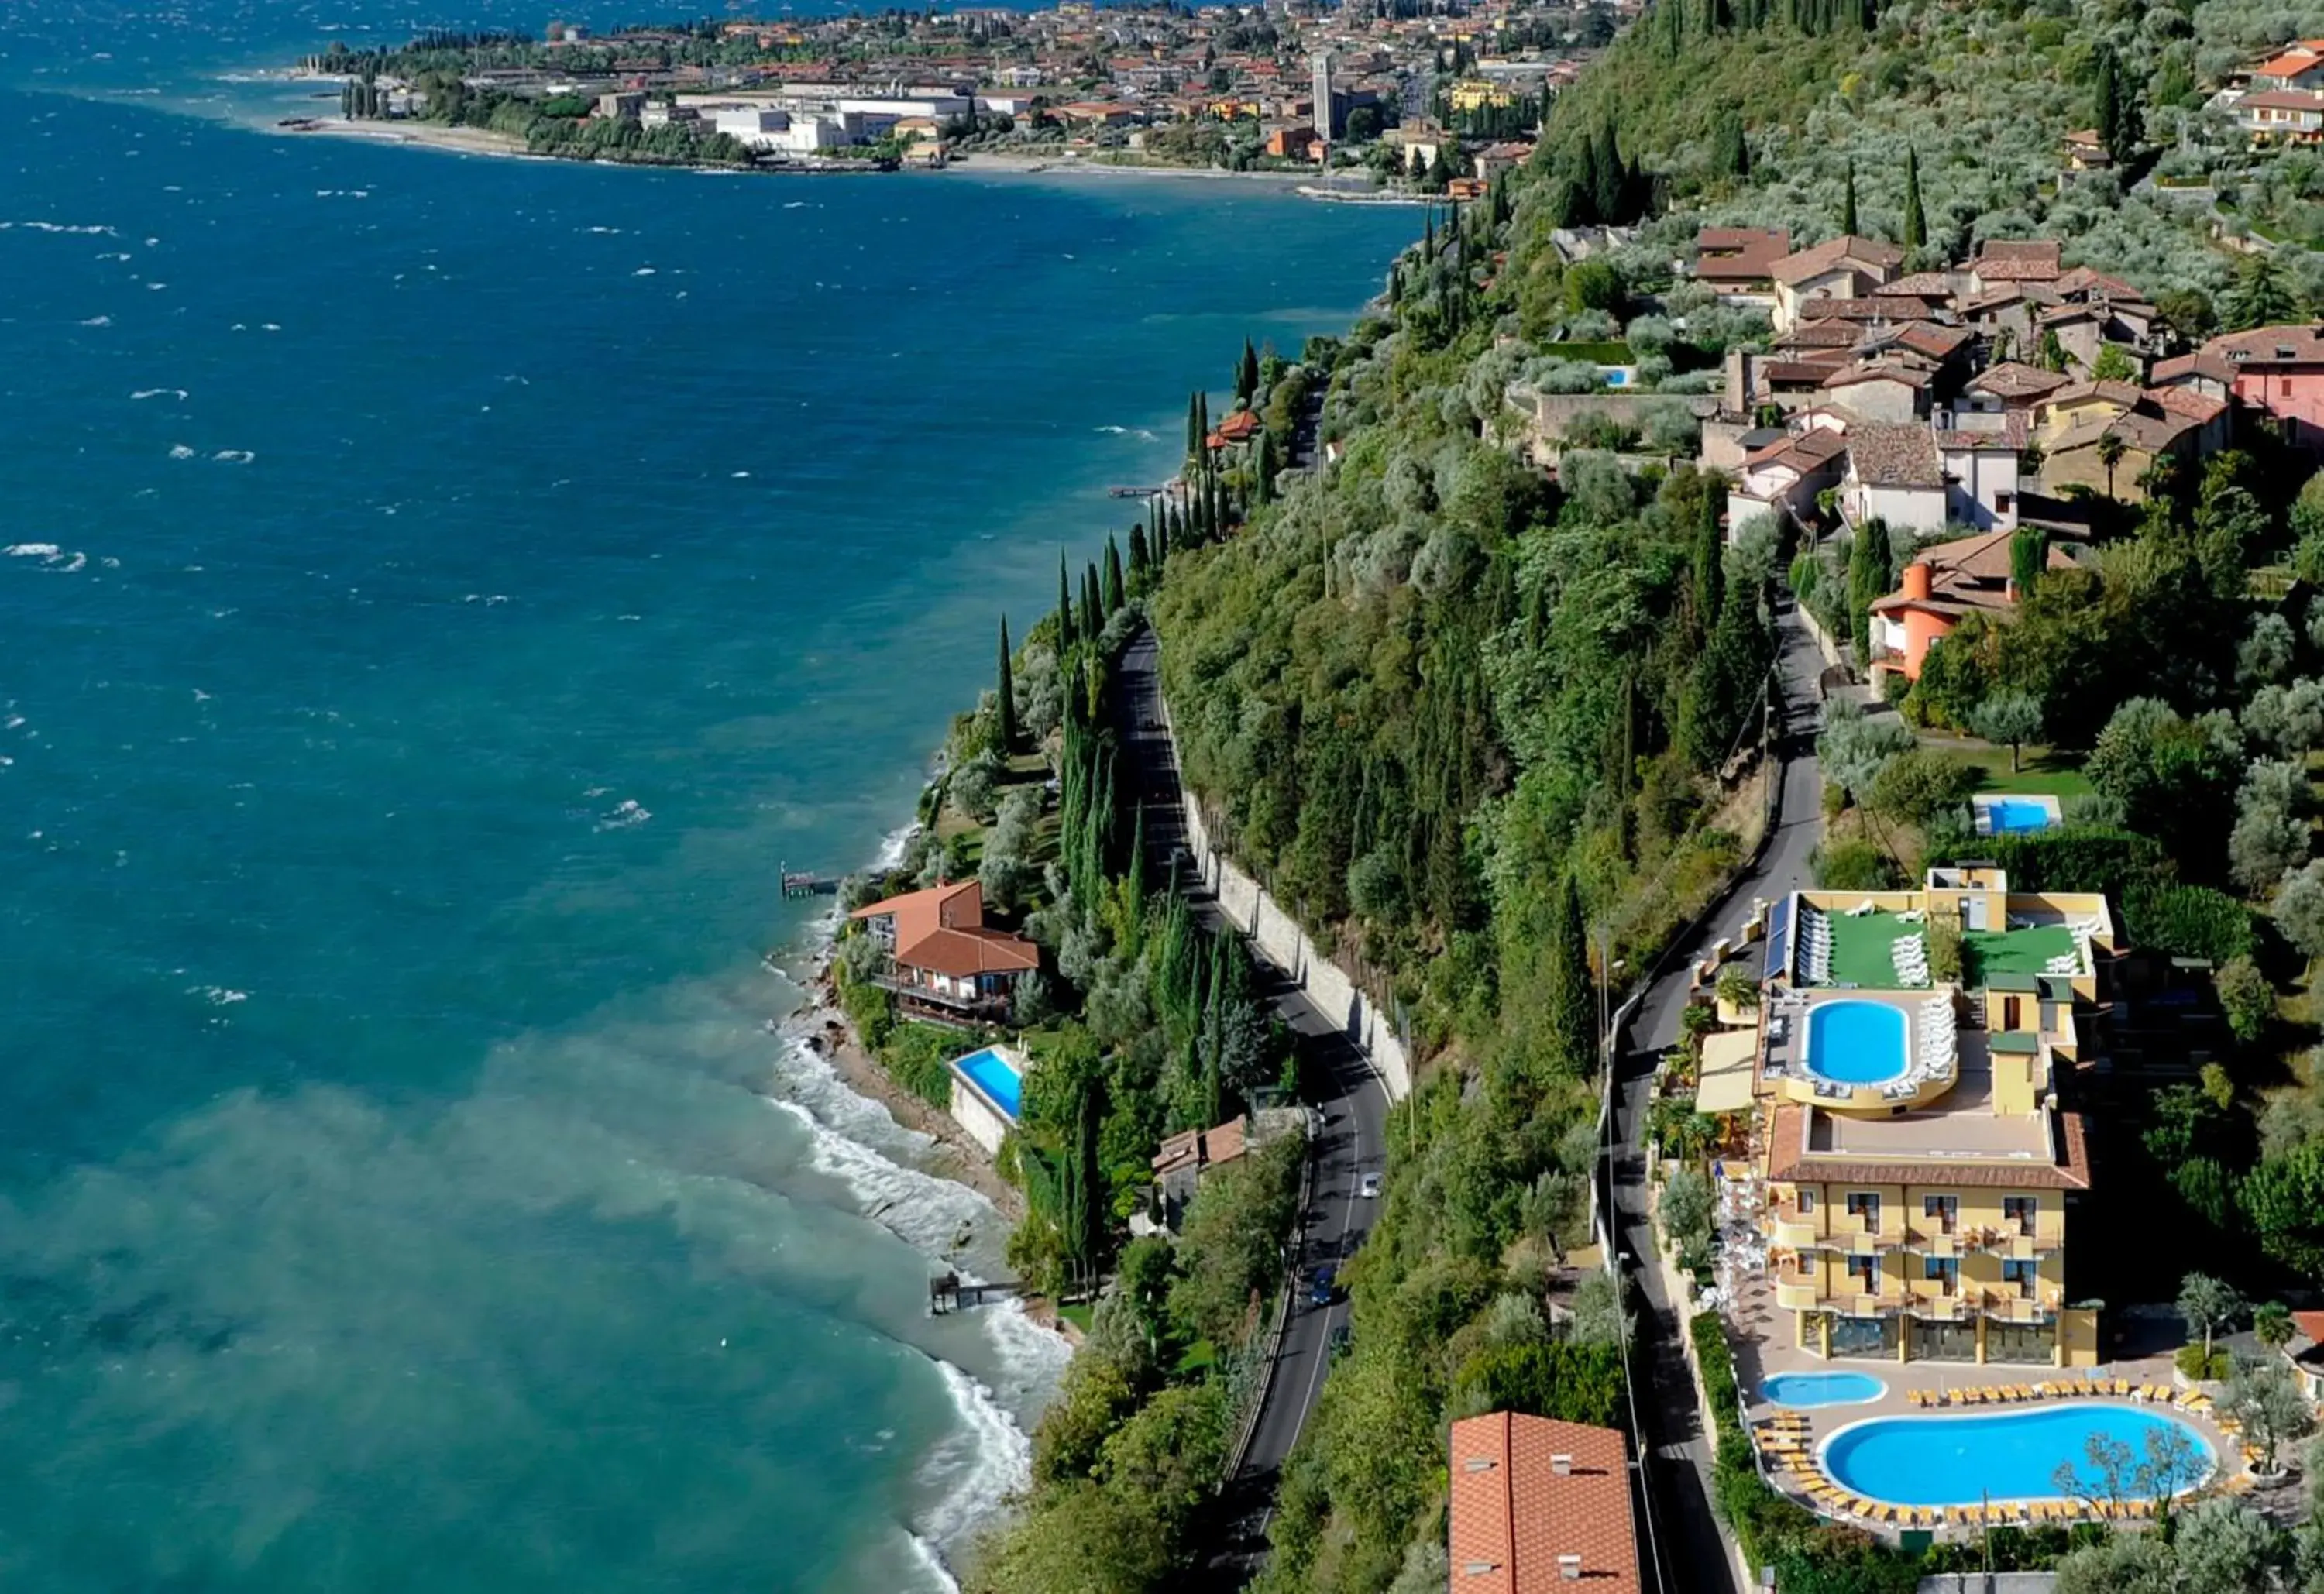 Day, Bird's-eye View in Hotel Piccolo Paradiso